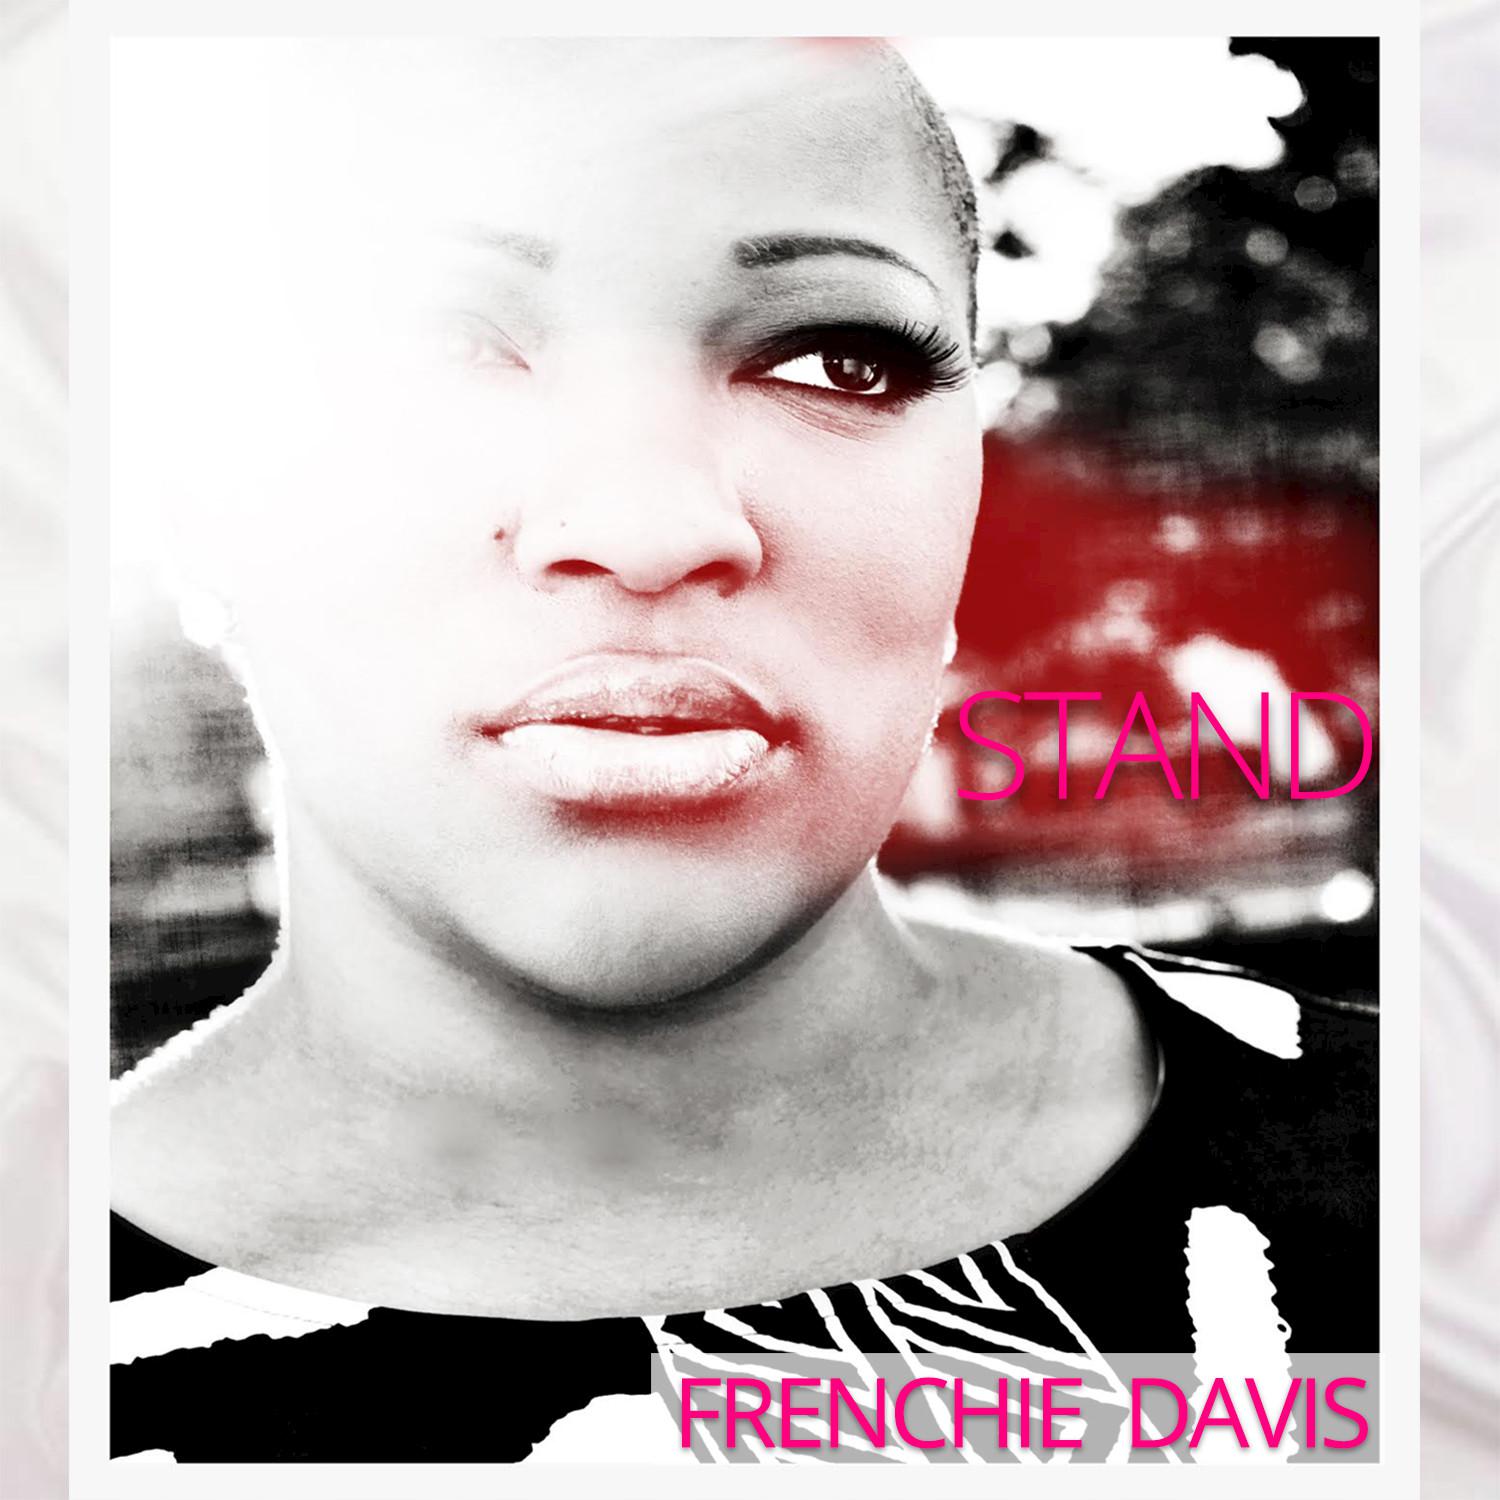 Frenchie Davis - Stand (By Me) (Original Mix)